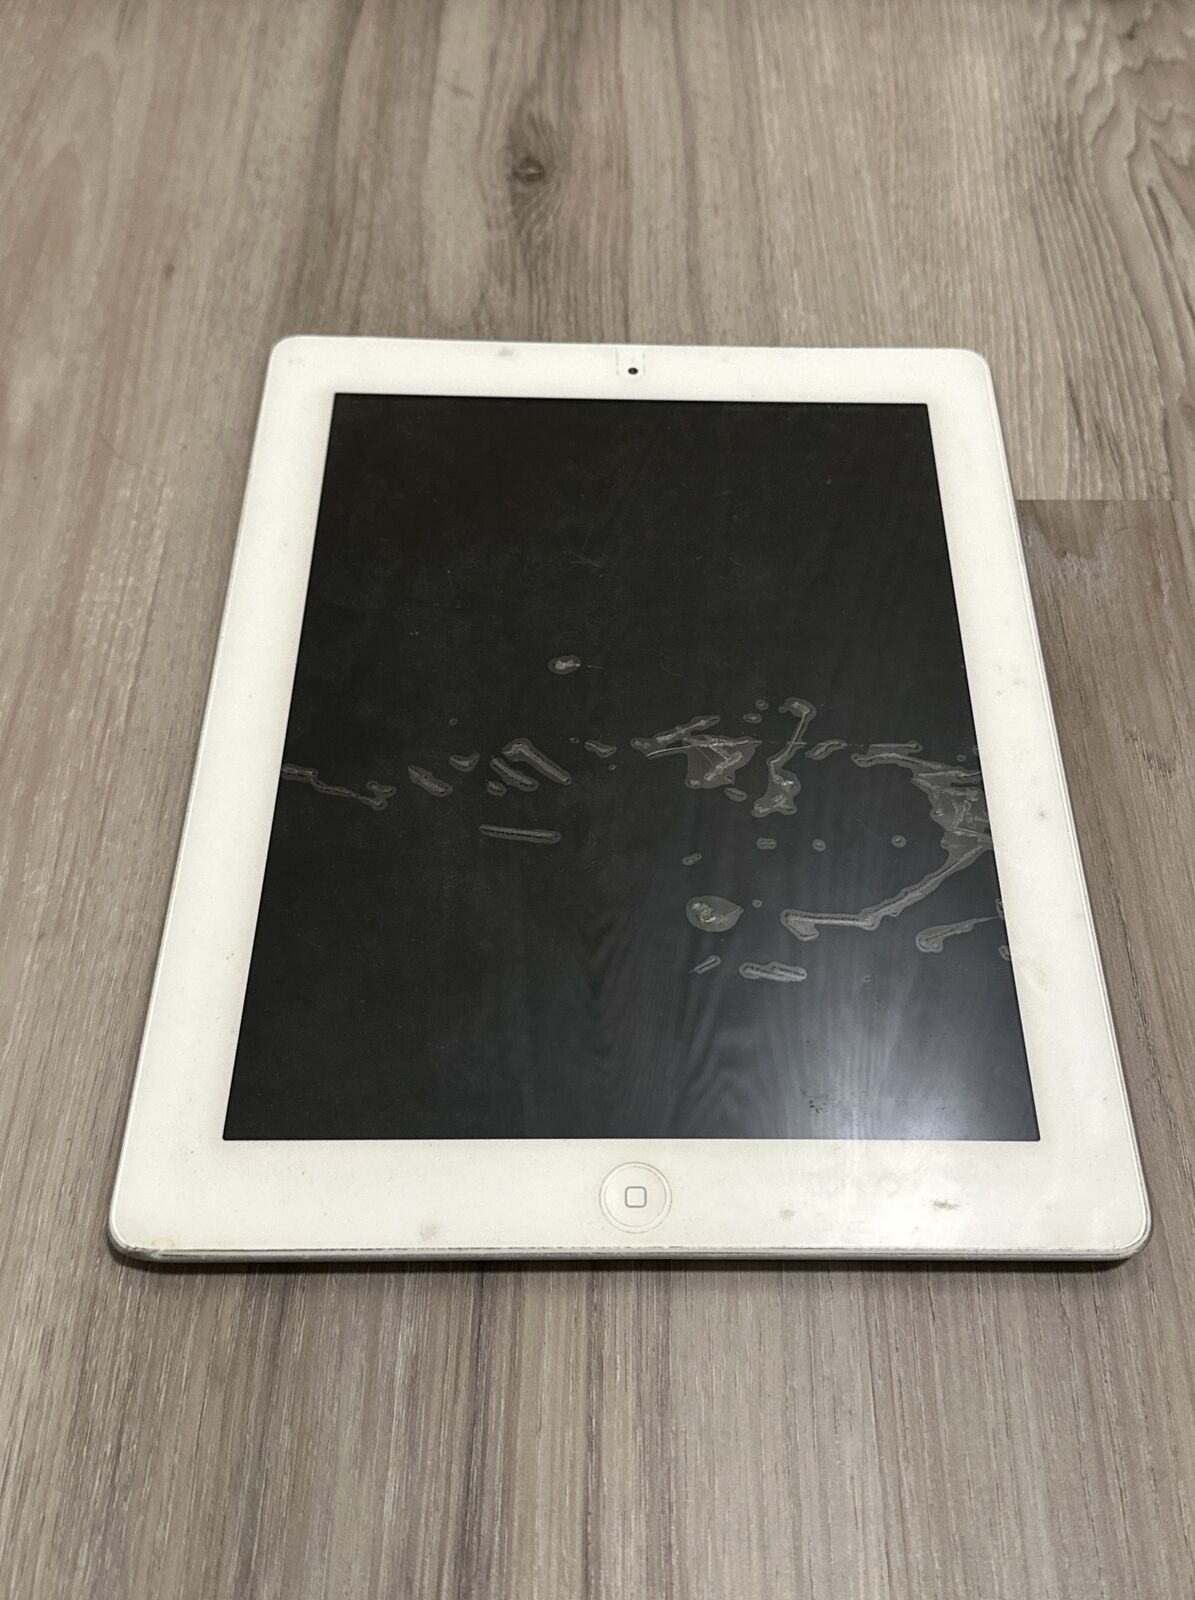 Apple iPad 2 32GB, Wi-Fi (Cellular Status Unkown) A1397 9.7in White/Silver PONW